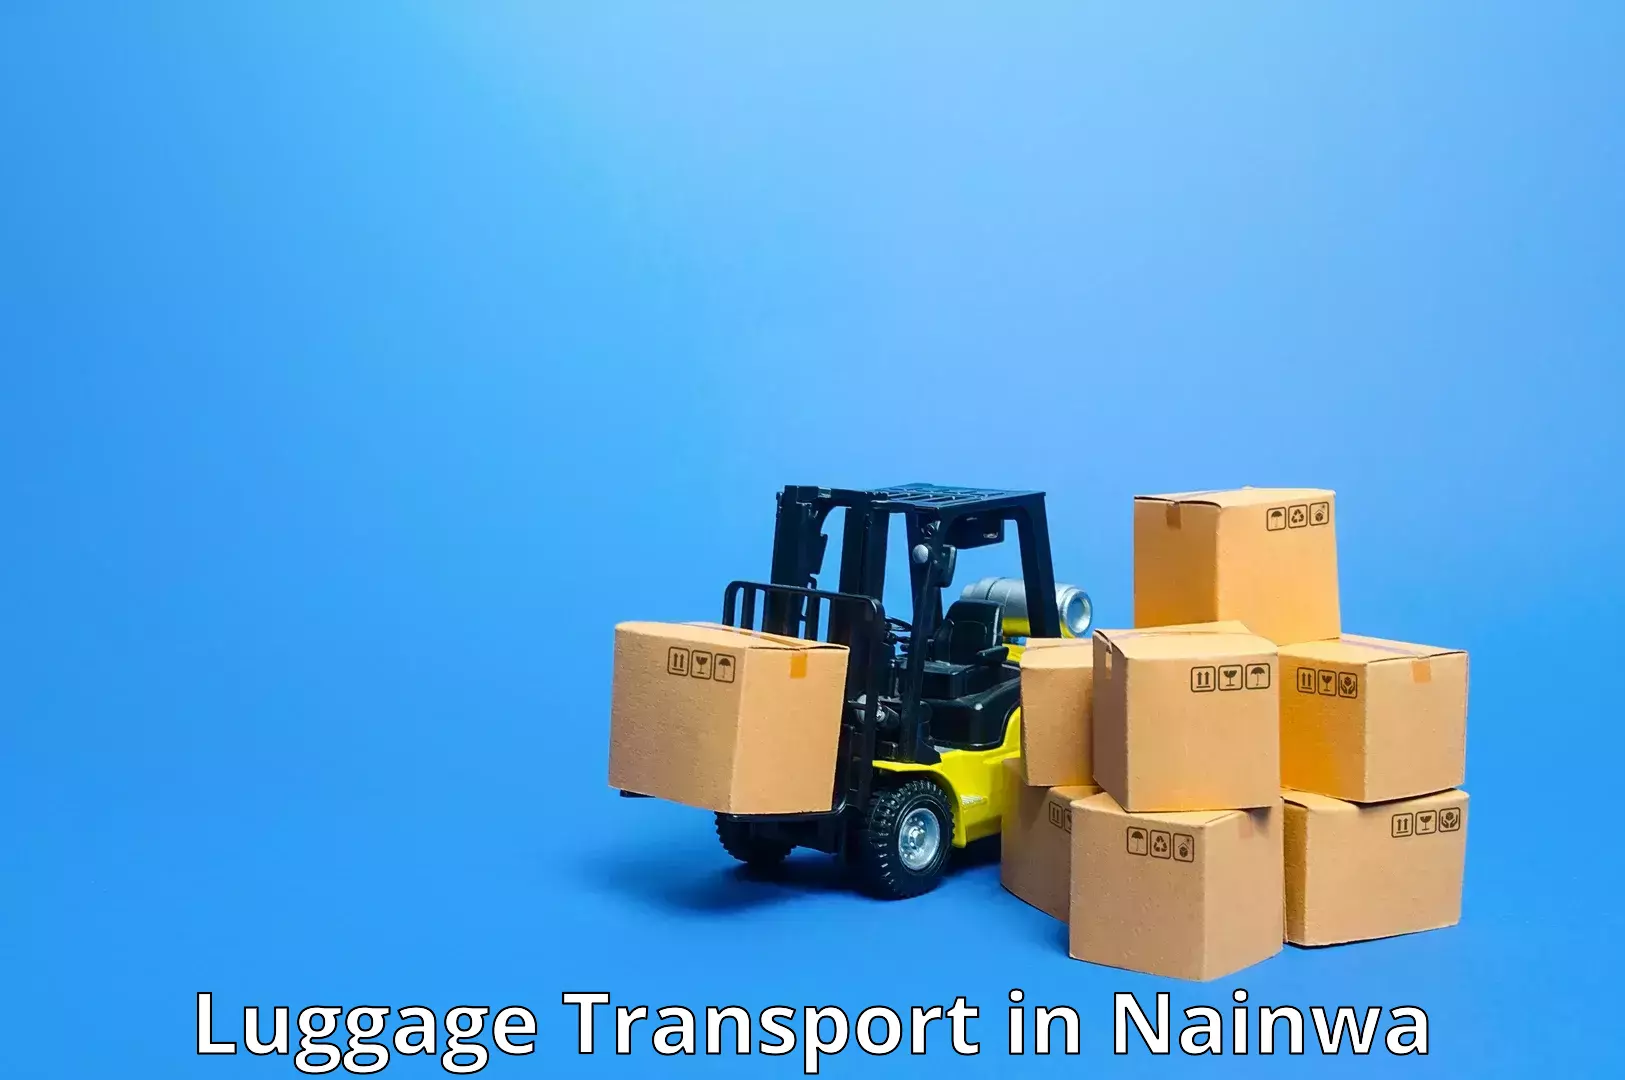 Luggage transport service in Nainwa